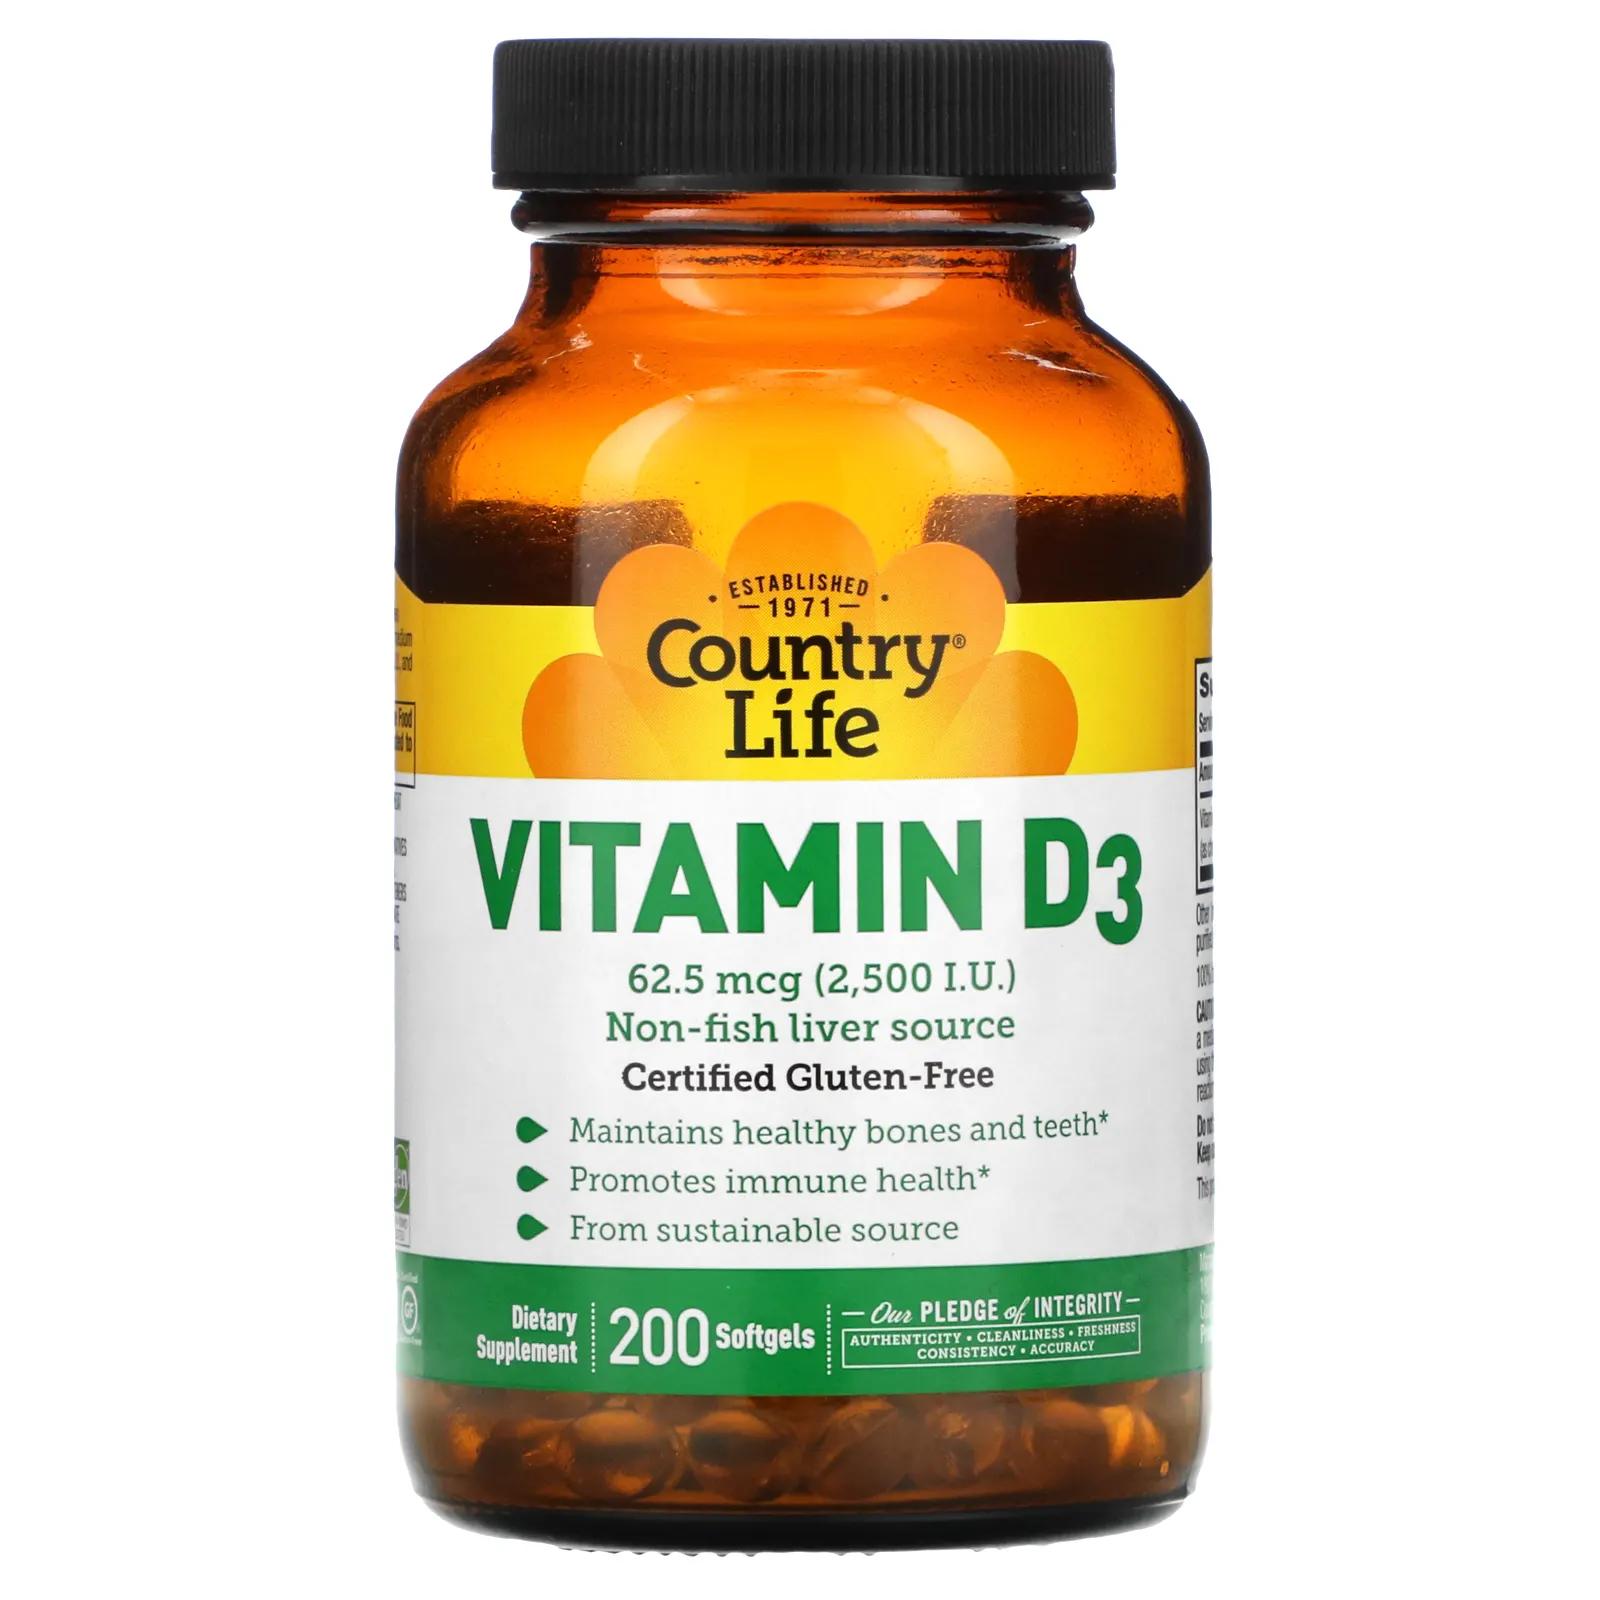 Country Life Витамин D3 2500 МЕ 200 желатиновых капсул витамин d3 country life 62 5 мкг 2500 ме 200 таблеток